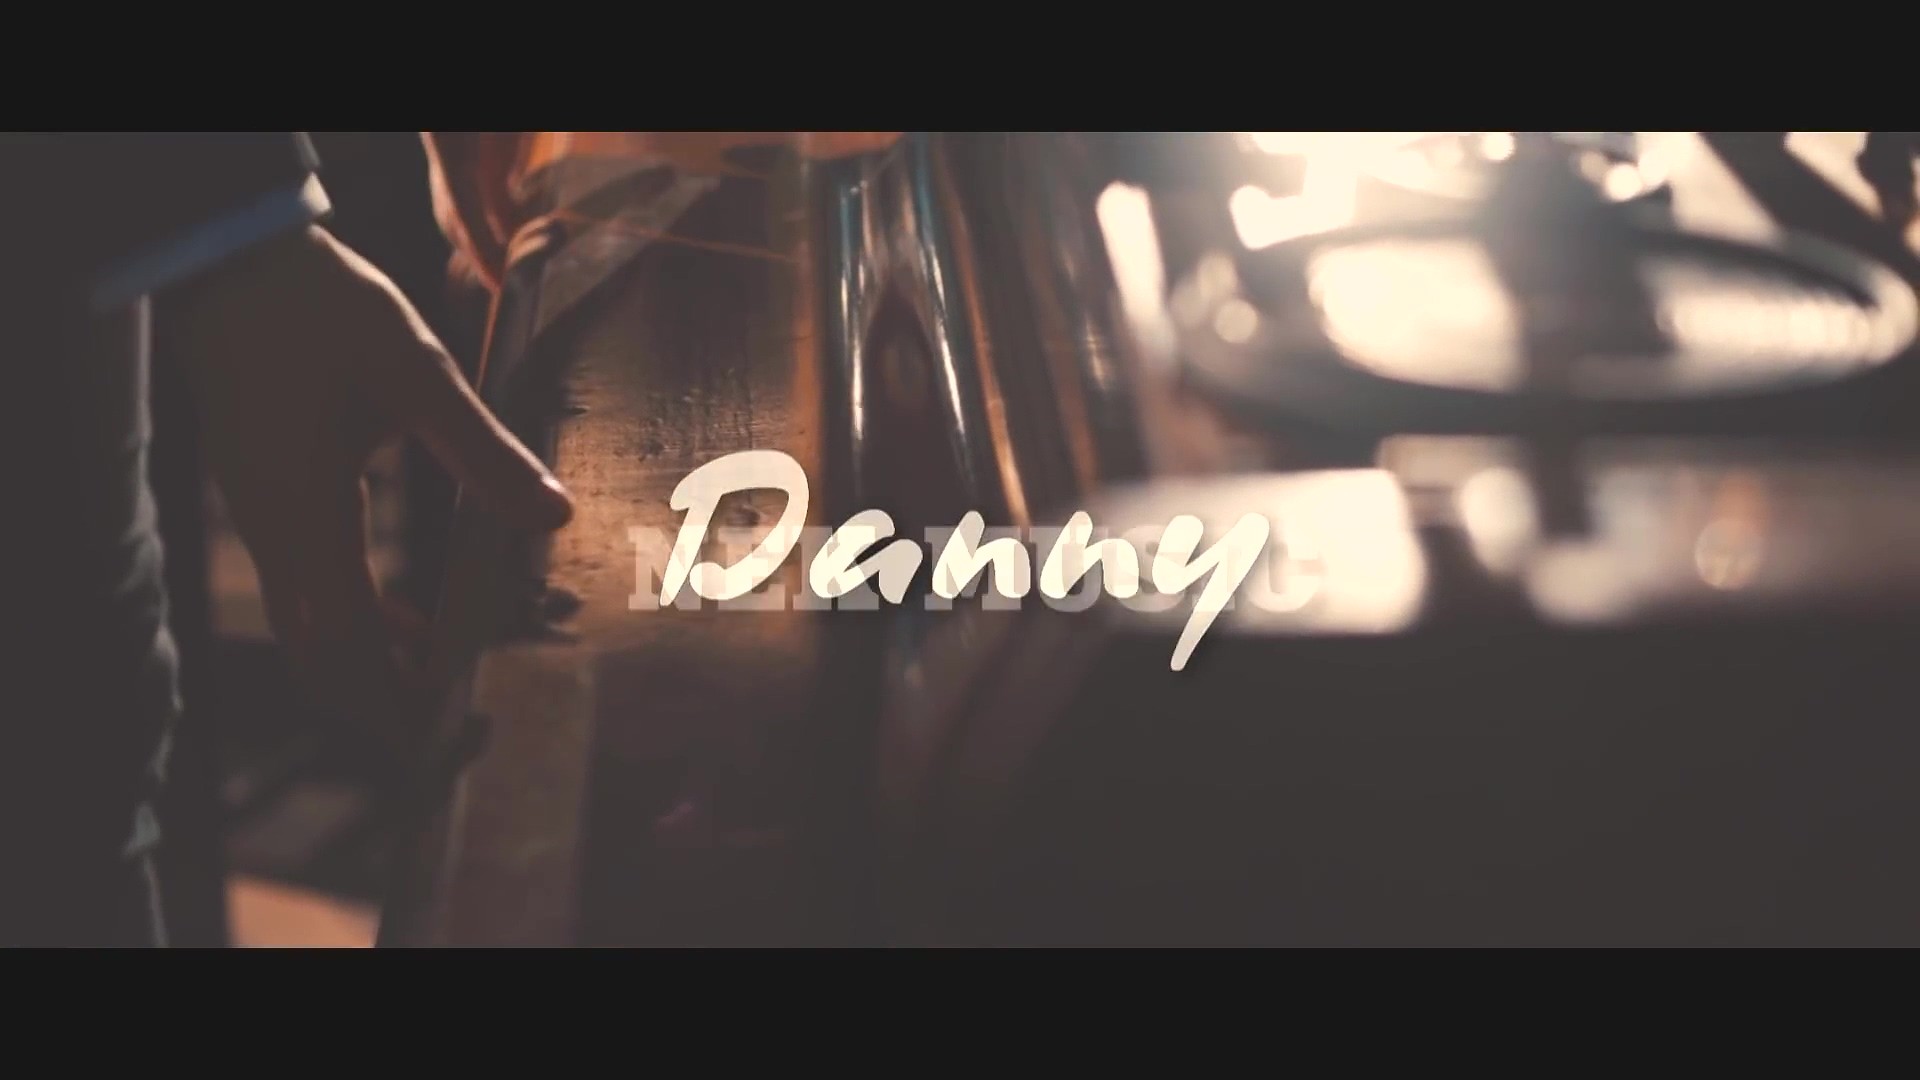 Danny – Imi pare rau